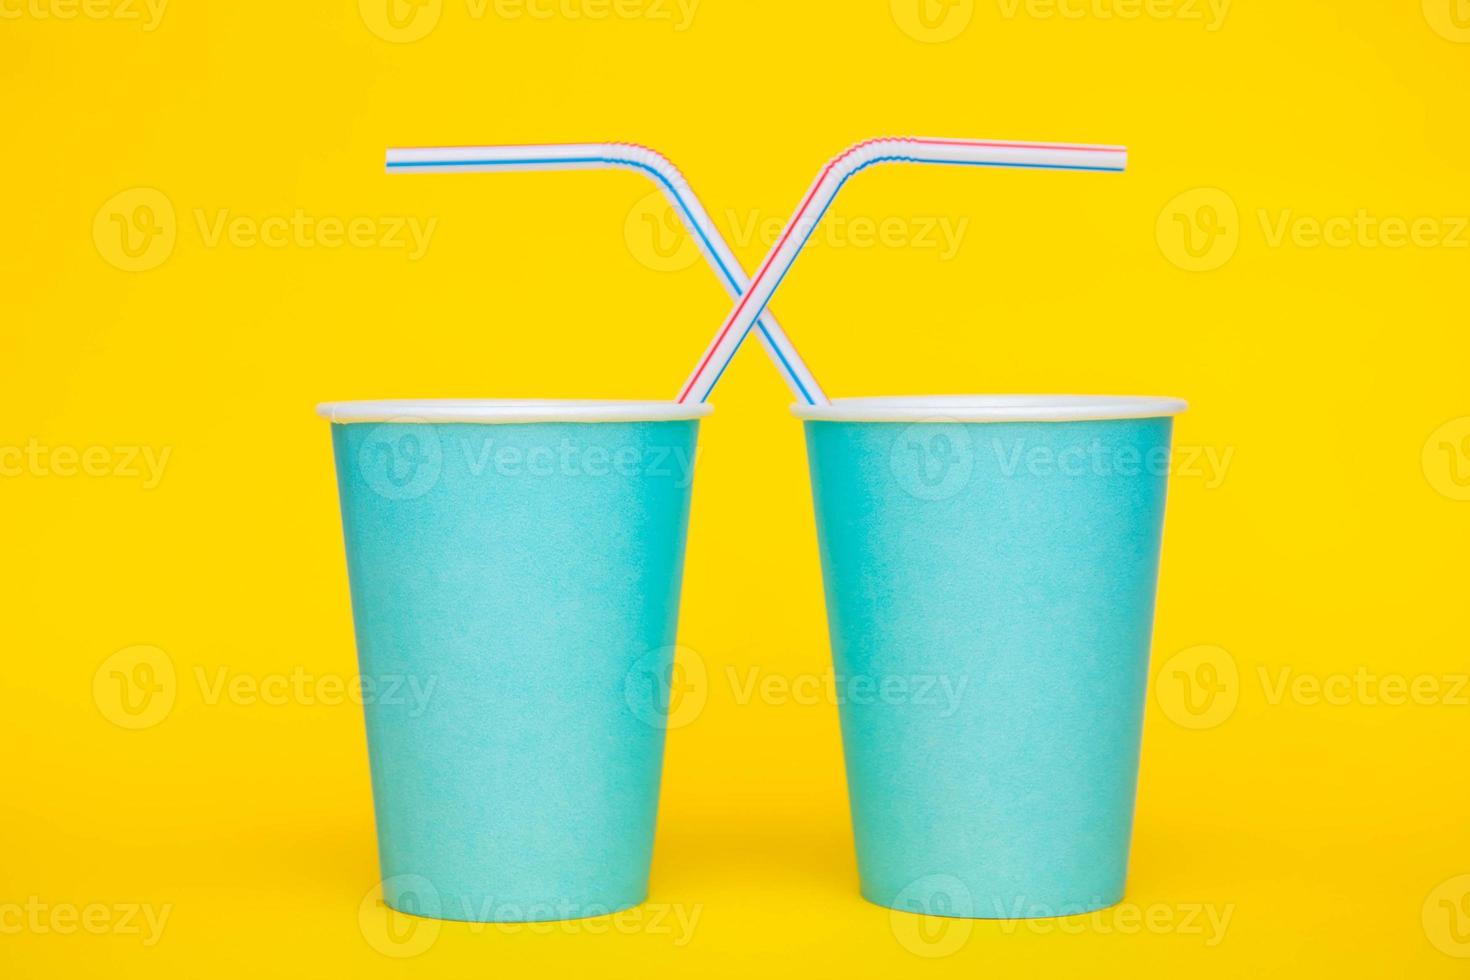 Dos vasos de papel azul con pajitas de plástico de colores para beber sobre fondo amarillo foto